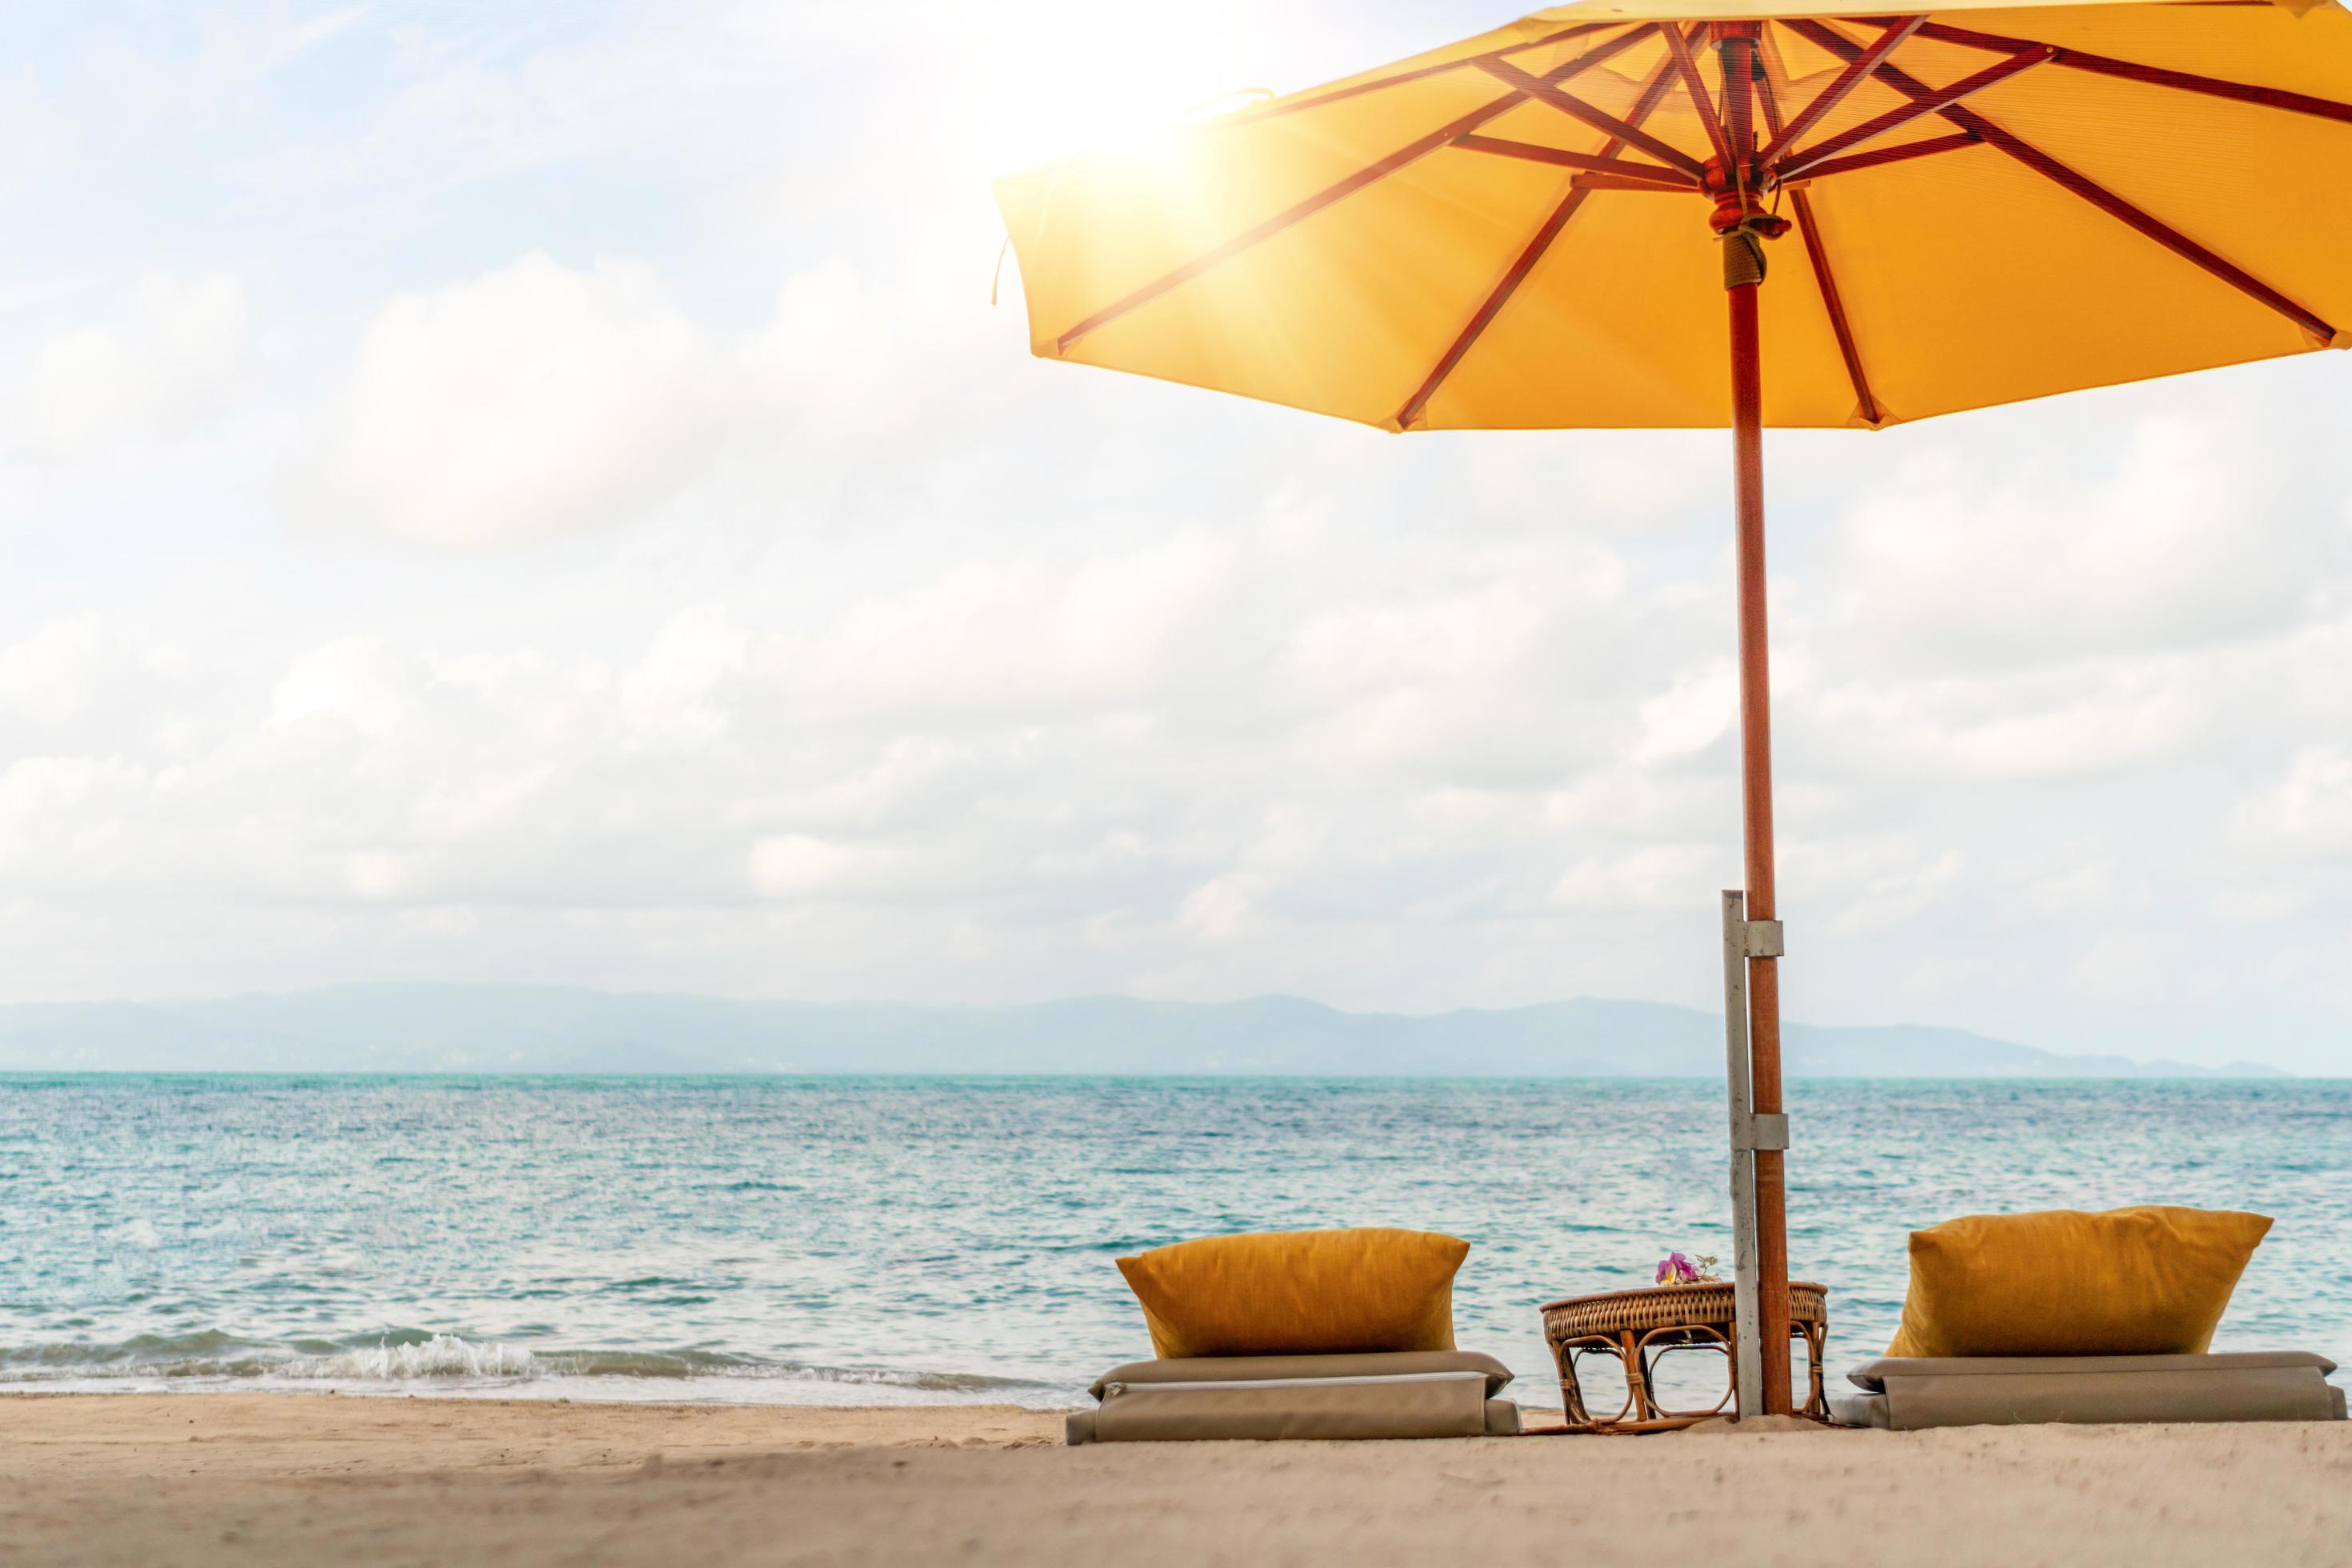 Summer Holiday 10x6.5ft Photography Backgroud Tropical Beach Chair Umbrella Sea Stones Island Blue Sky Backdrop Coastal Relaxing Holiday Adults Kid Baby Photo Potraits 